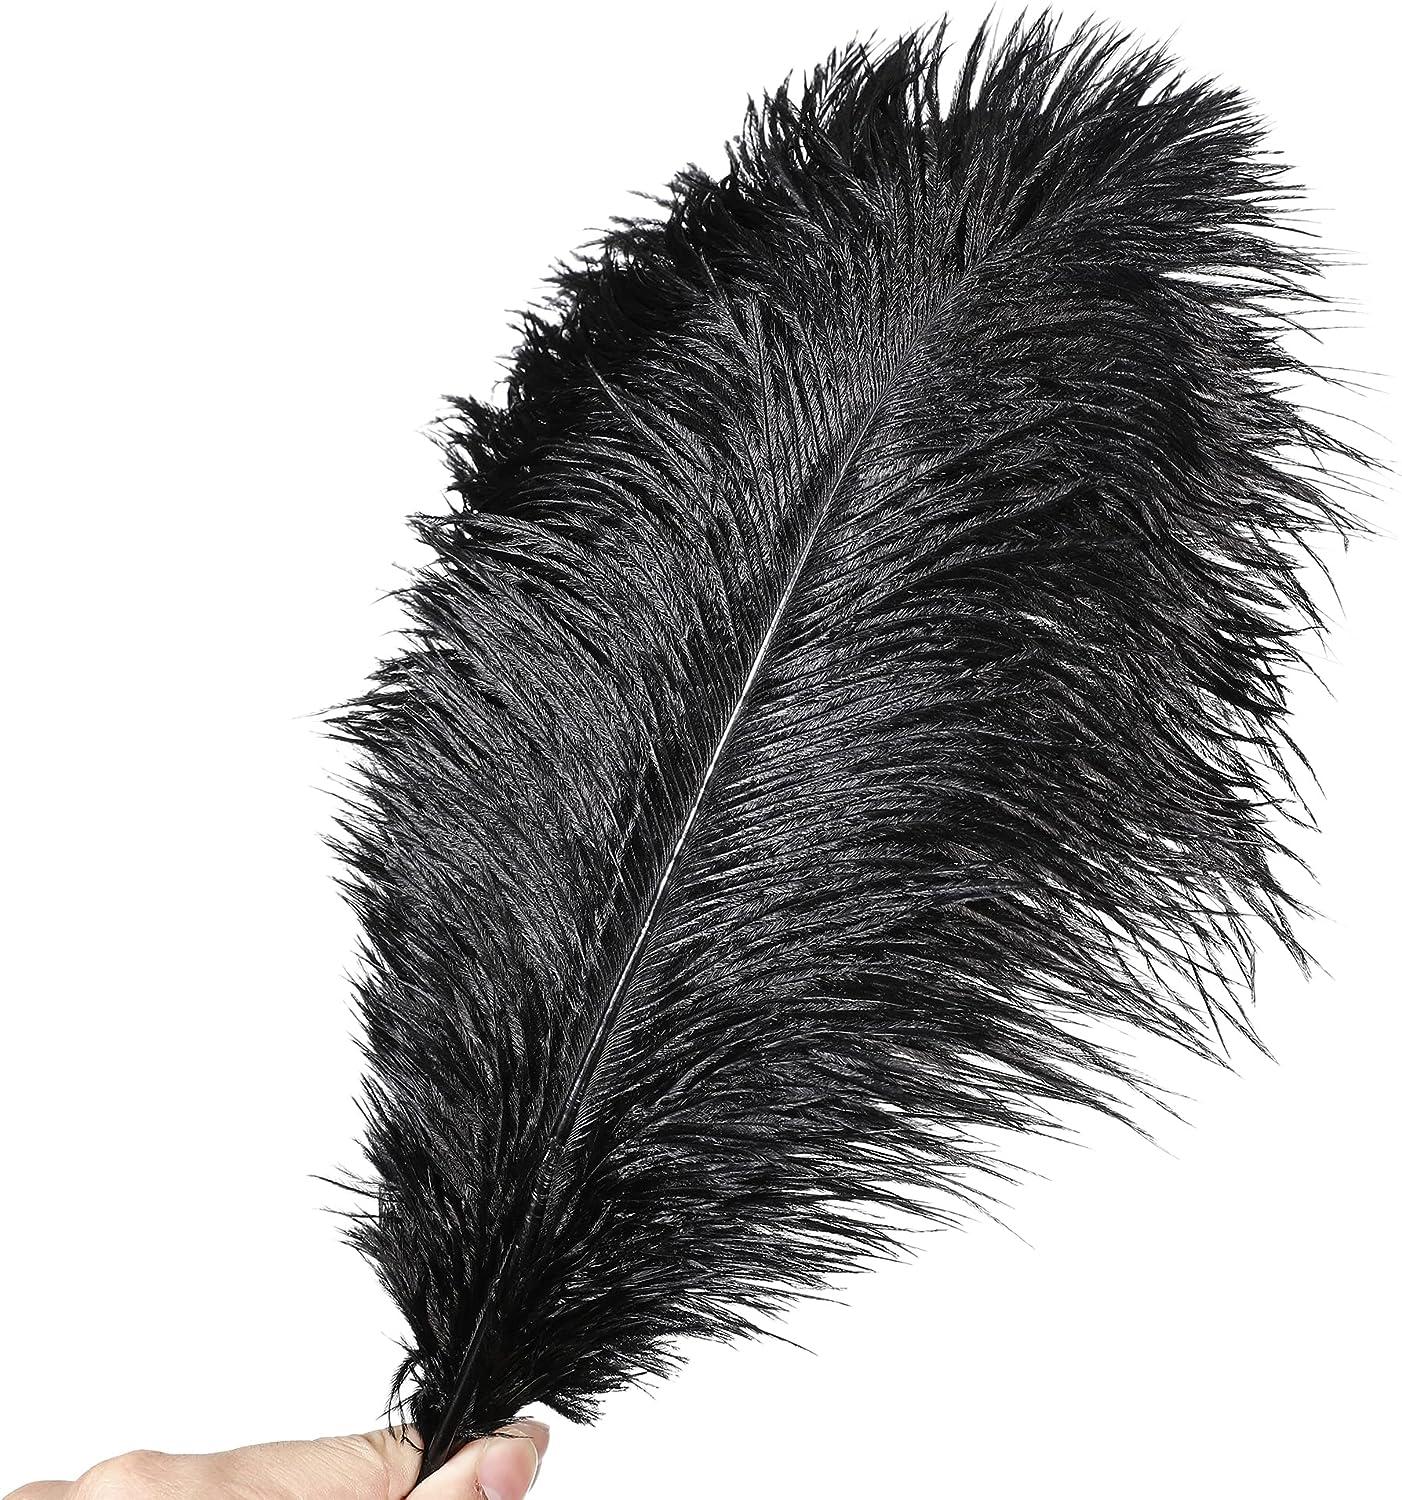 10 Pcs 45-50 cm/18-20 inch Black Wedding Ostrich Feathers Crafts